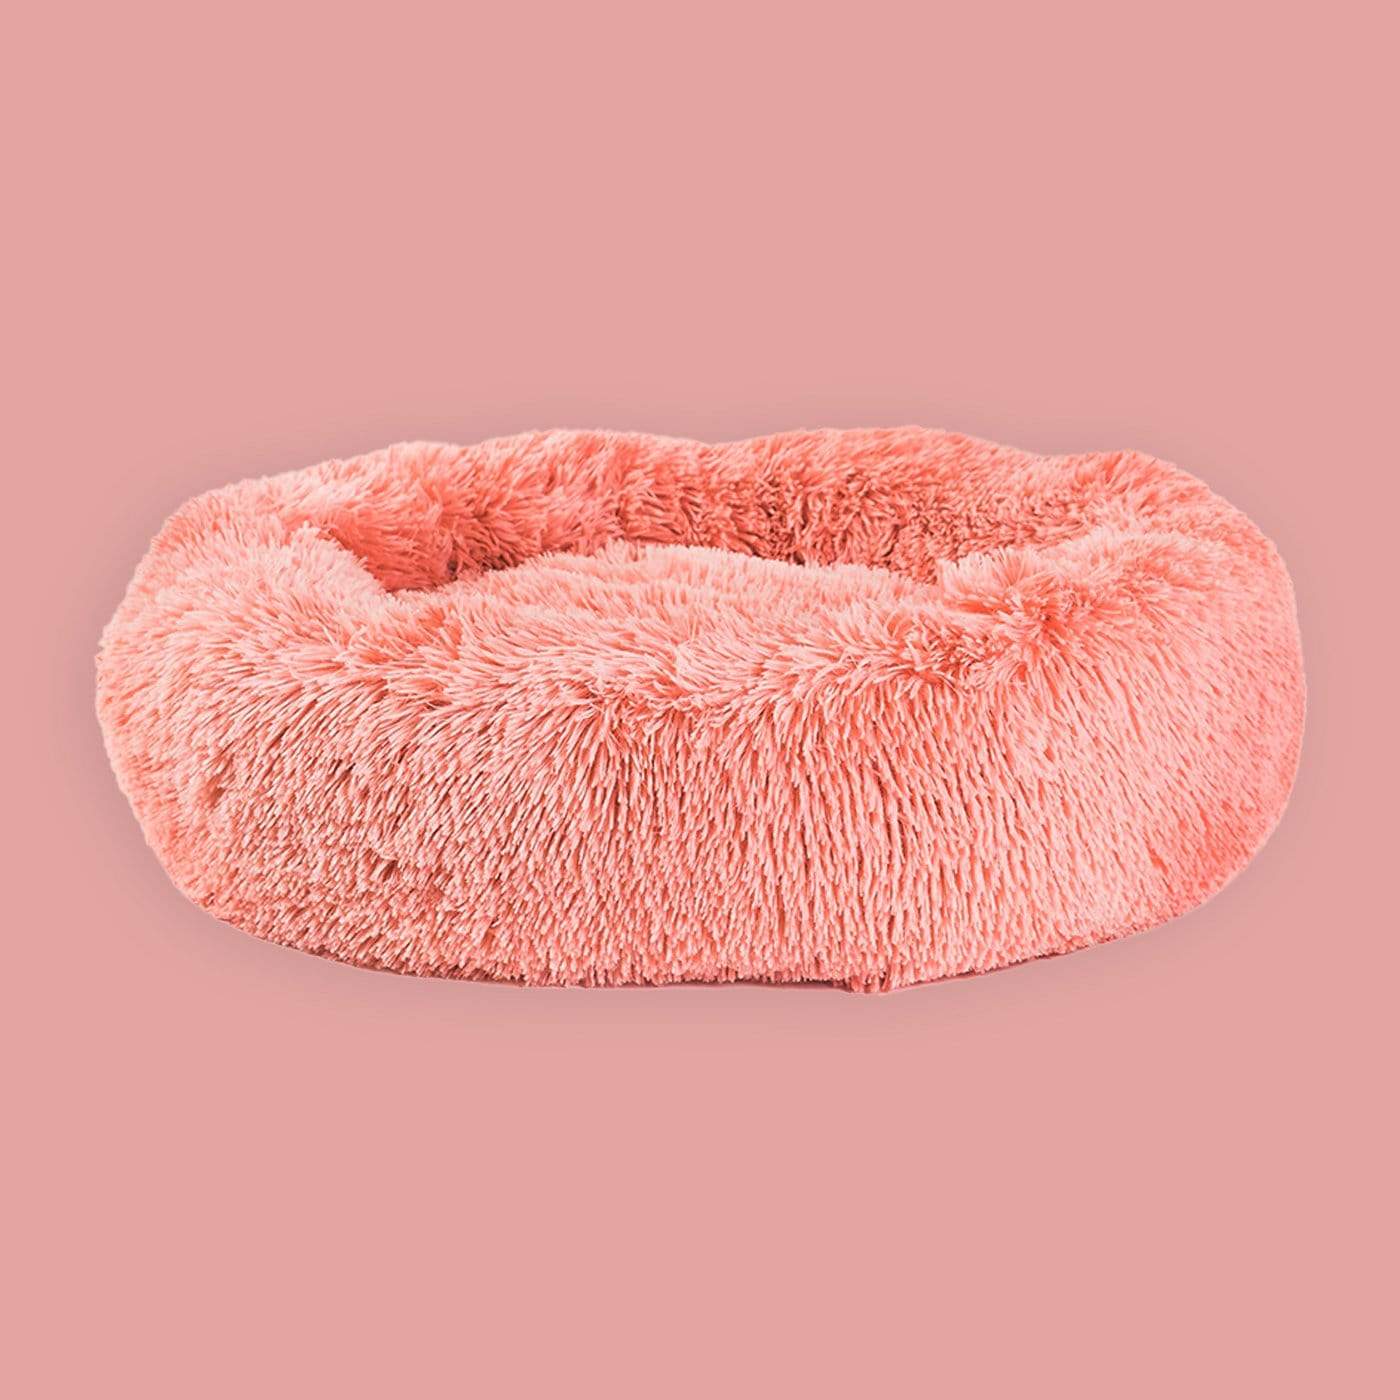 ®FLAPY BED 2 |  מיטה מפנקת פלאפי עם כיסוי נשלף